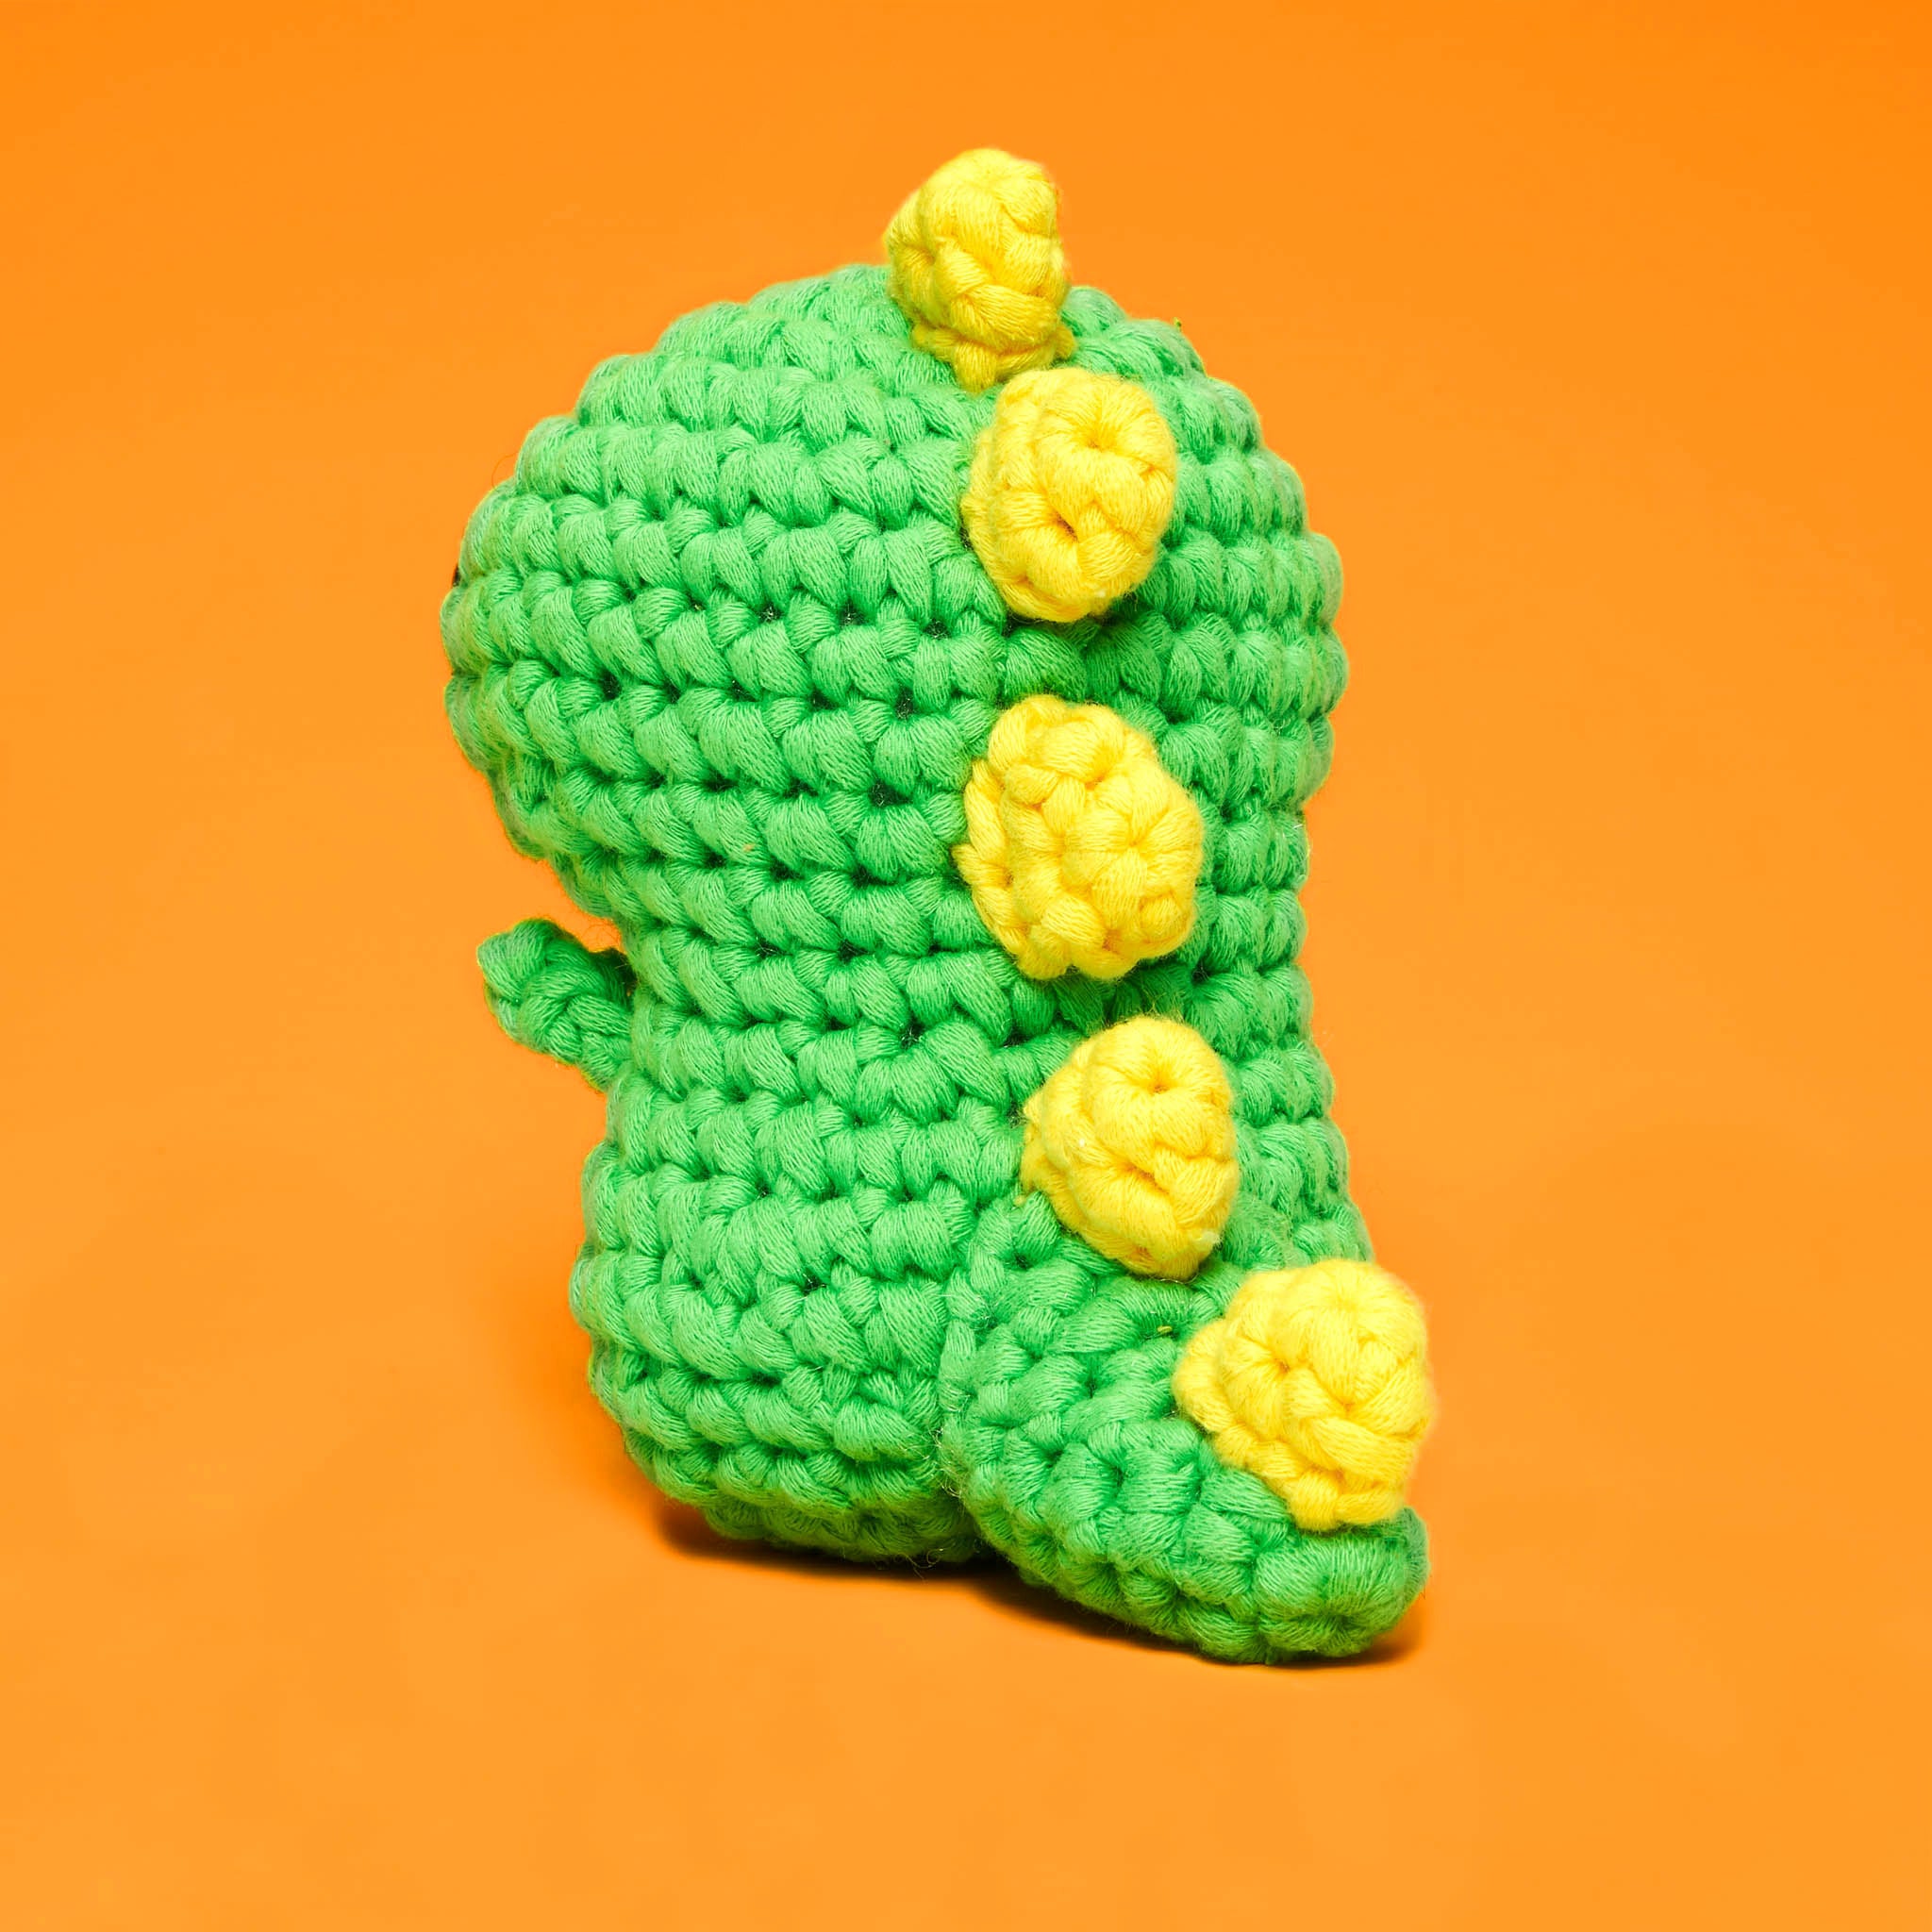 Crochet Kit For Beginners, Cute Dinosaurs With Easy Peasy Yarn